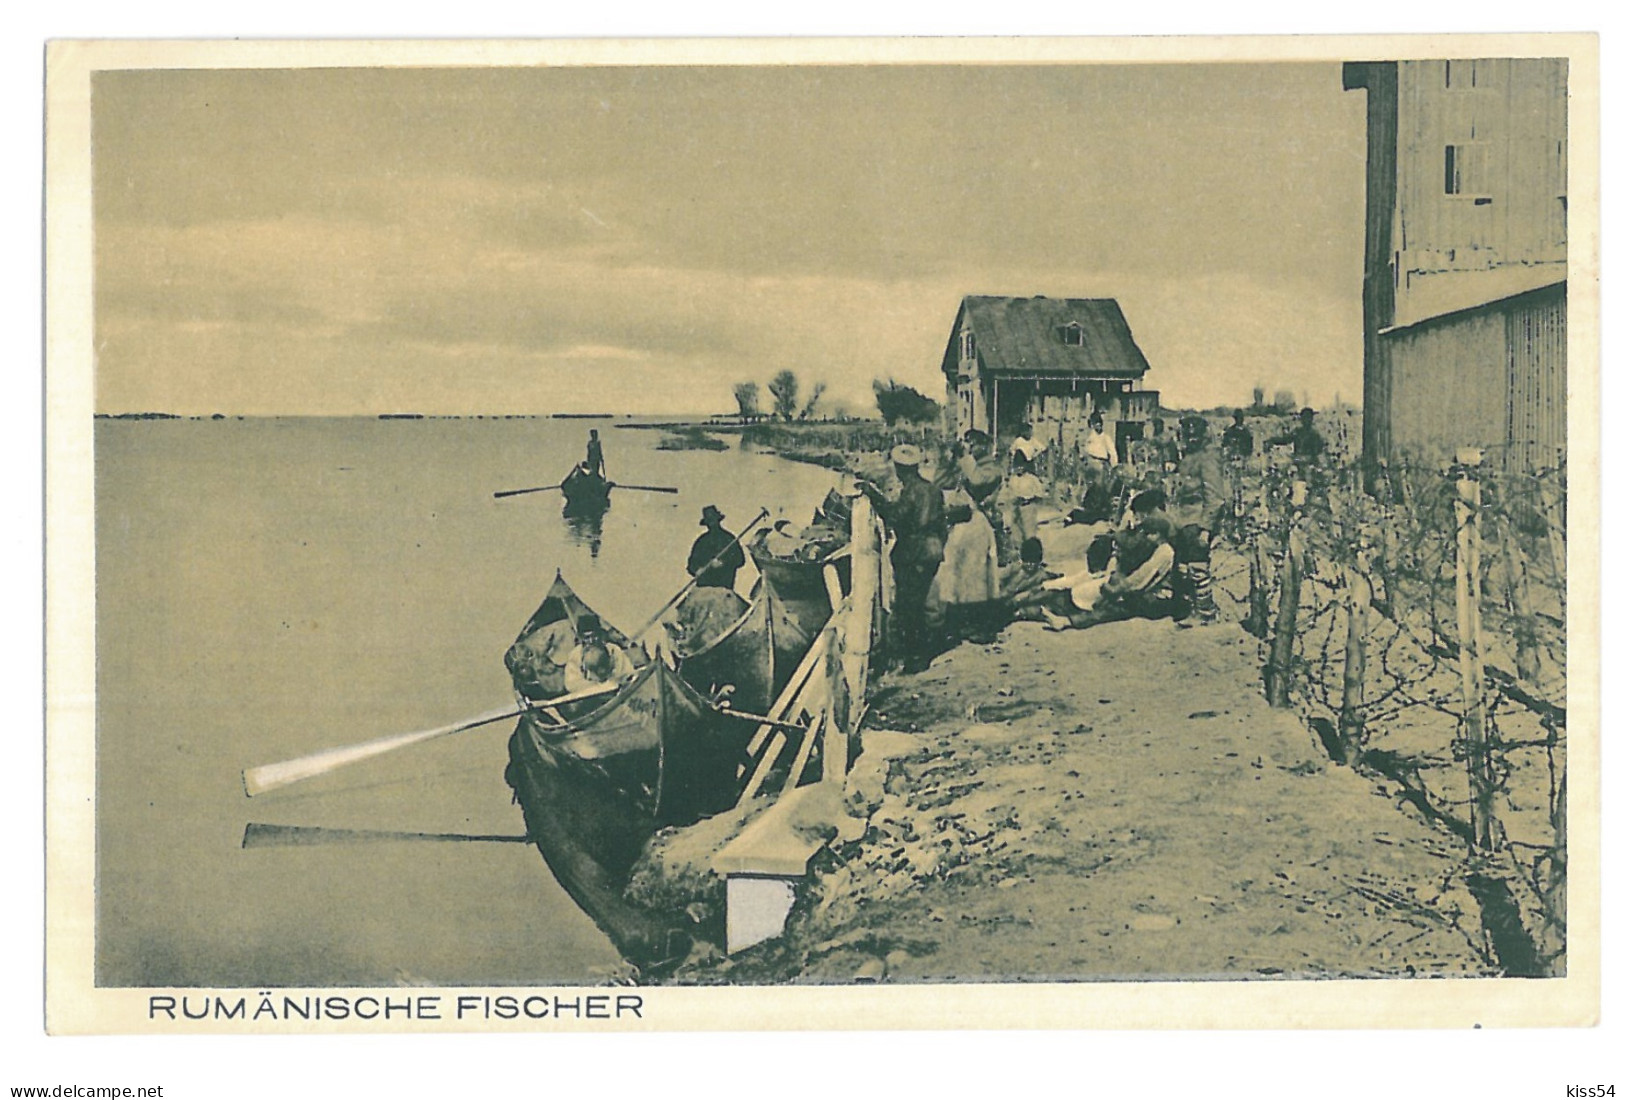 RO 45 - 11844 TULCEA, Rumanien Fishermen, Danube, Romania - Old Postcard - Unused - Romania